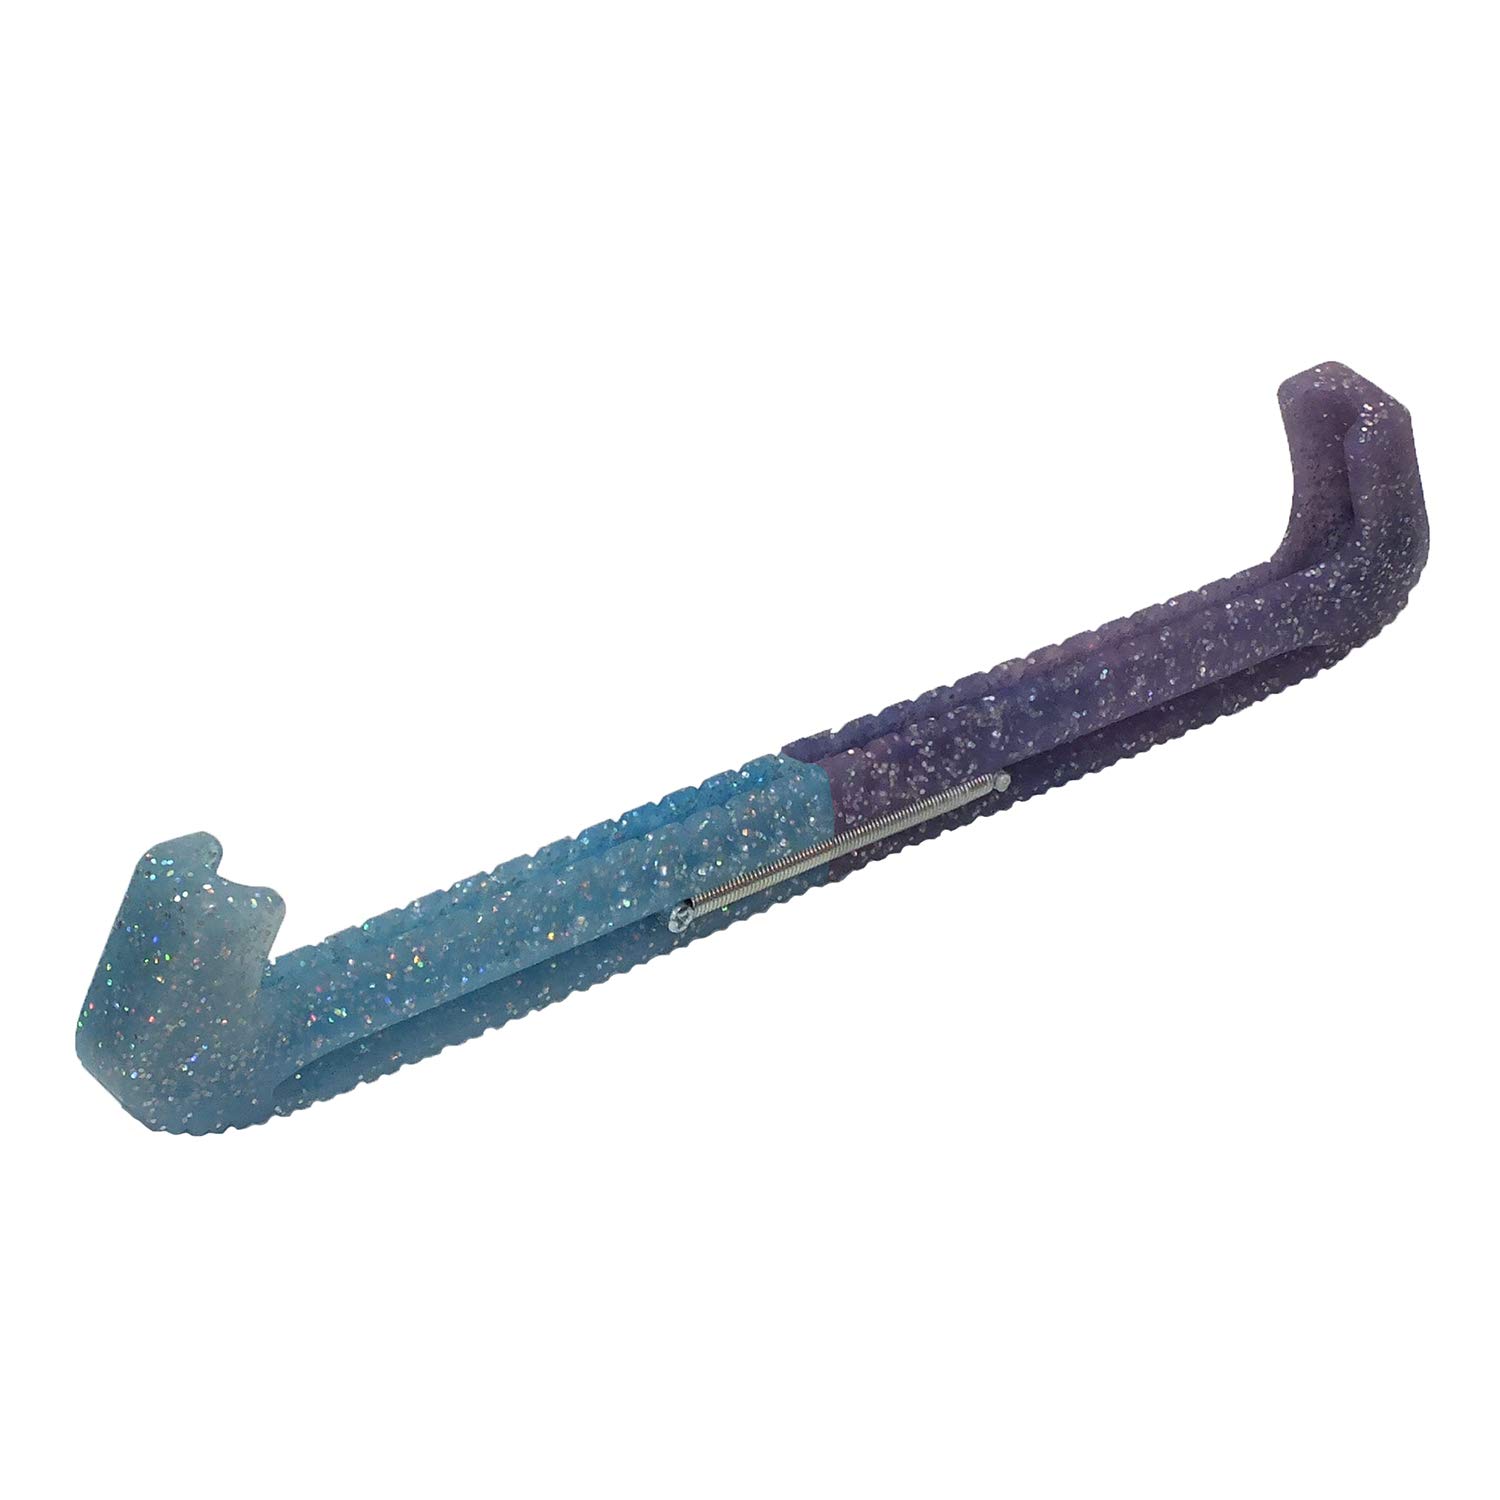 Guardog Hard Universal Figure Ice Skate Guards - Chameleonz Rainbow Glitz Blue To Purple